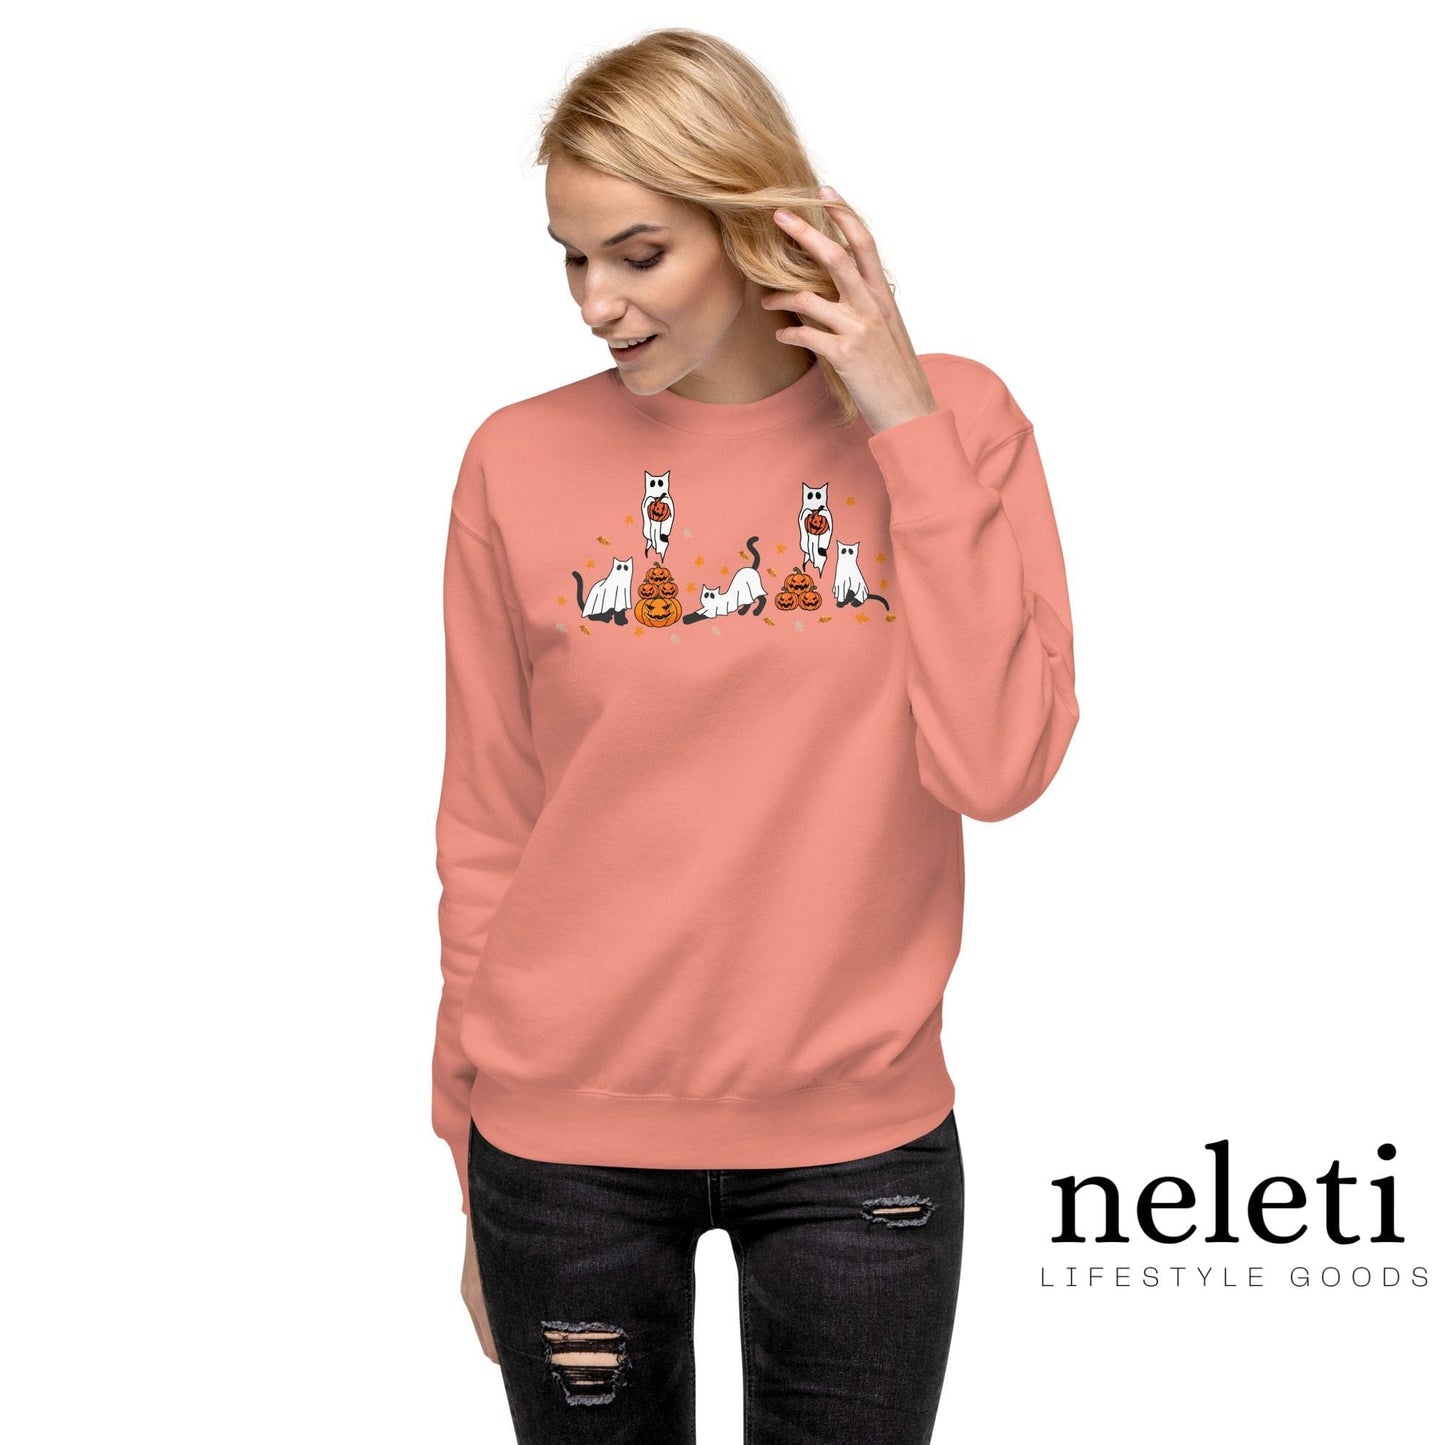 neleti.com-haloween-dusty-rose-sweatshirt-for-cat-lovers